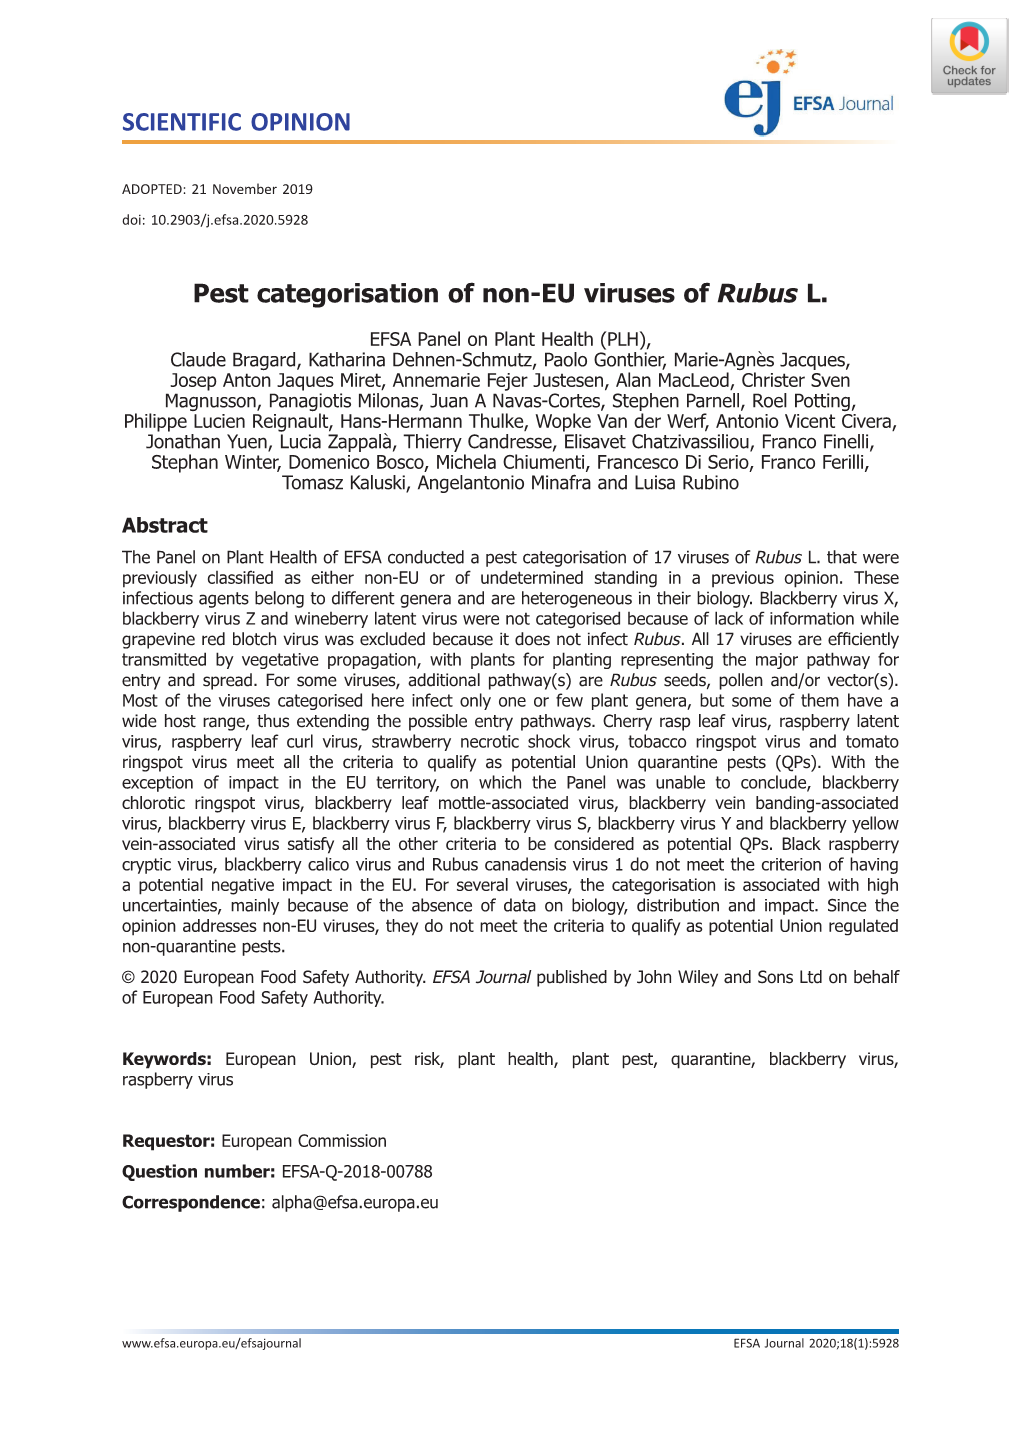 Pest Categorisation of Non‐EU Viruses of Rubus L